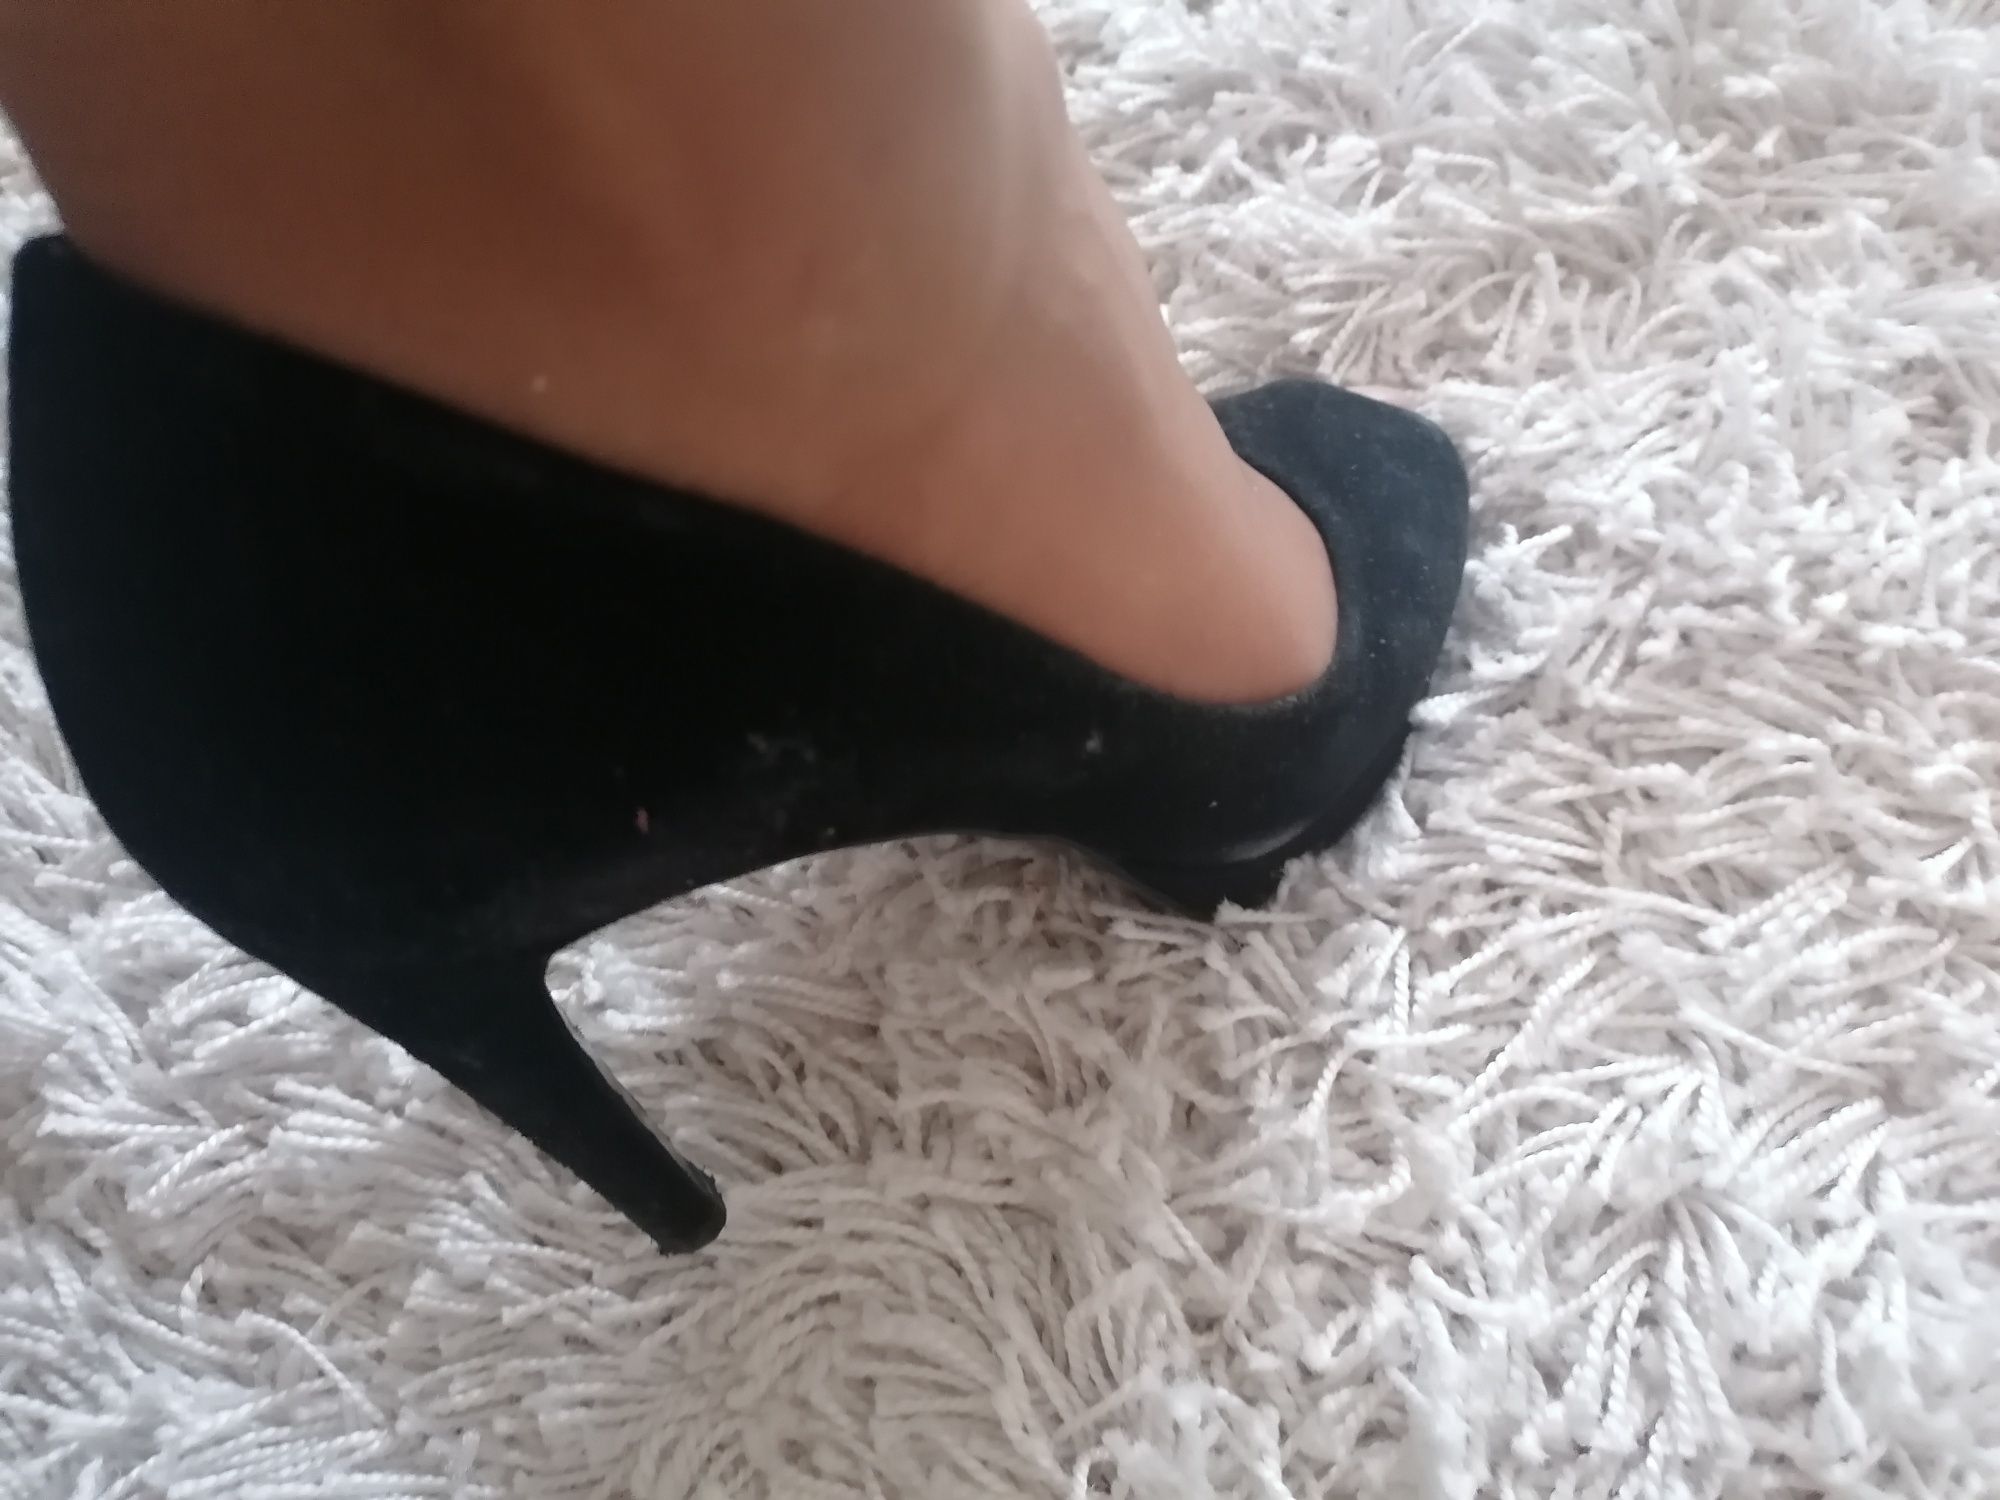 Sapato em camurça preto